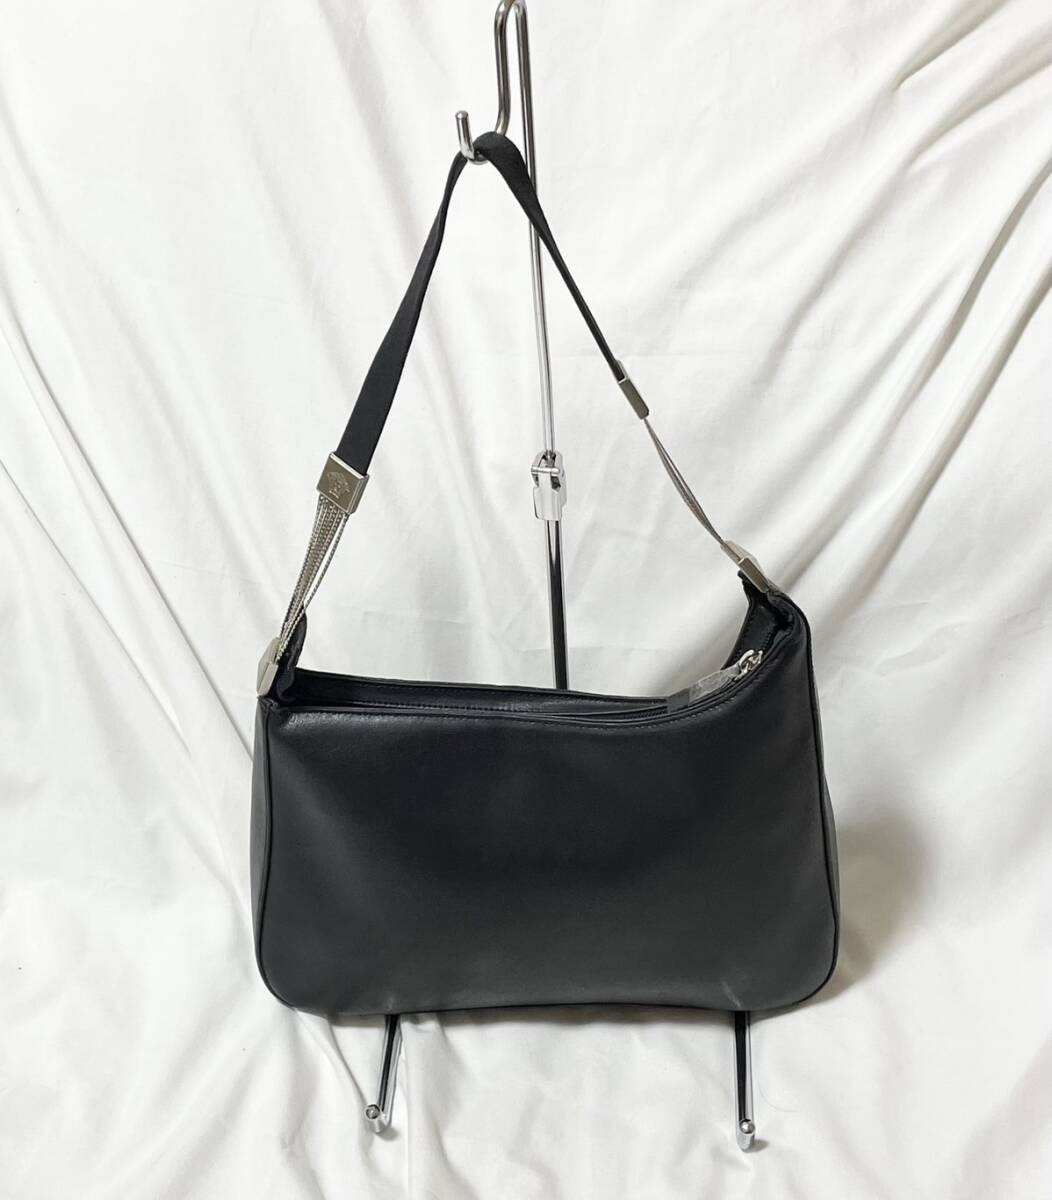  Italy made GIANNI VERSACE Gianni Versace mete.-sa chain leather handbag storage bag attaching 